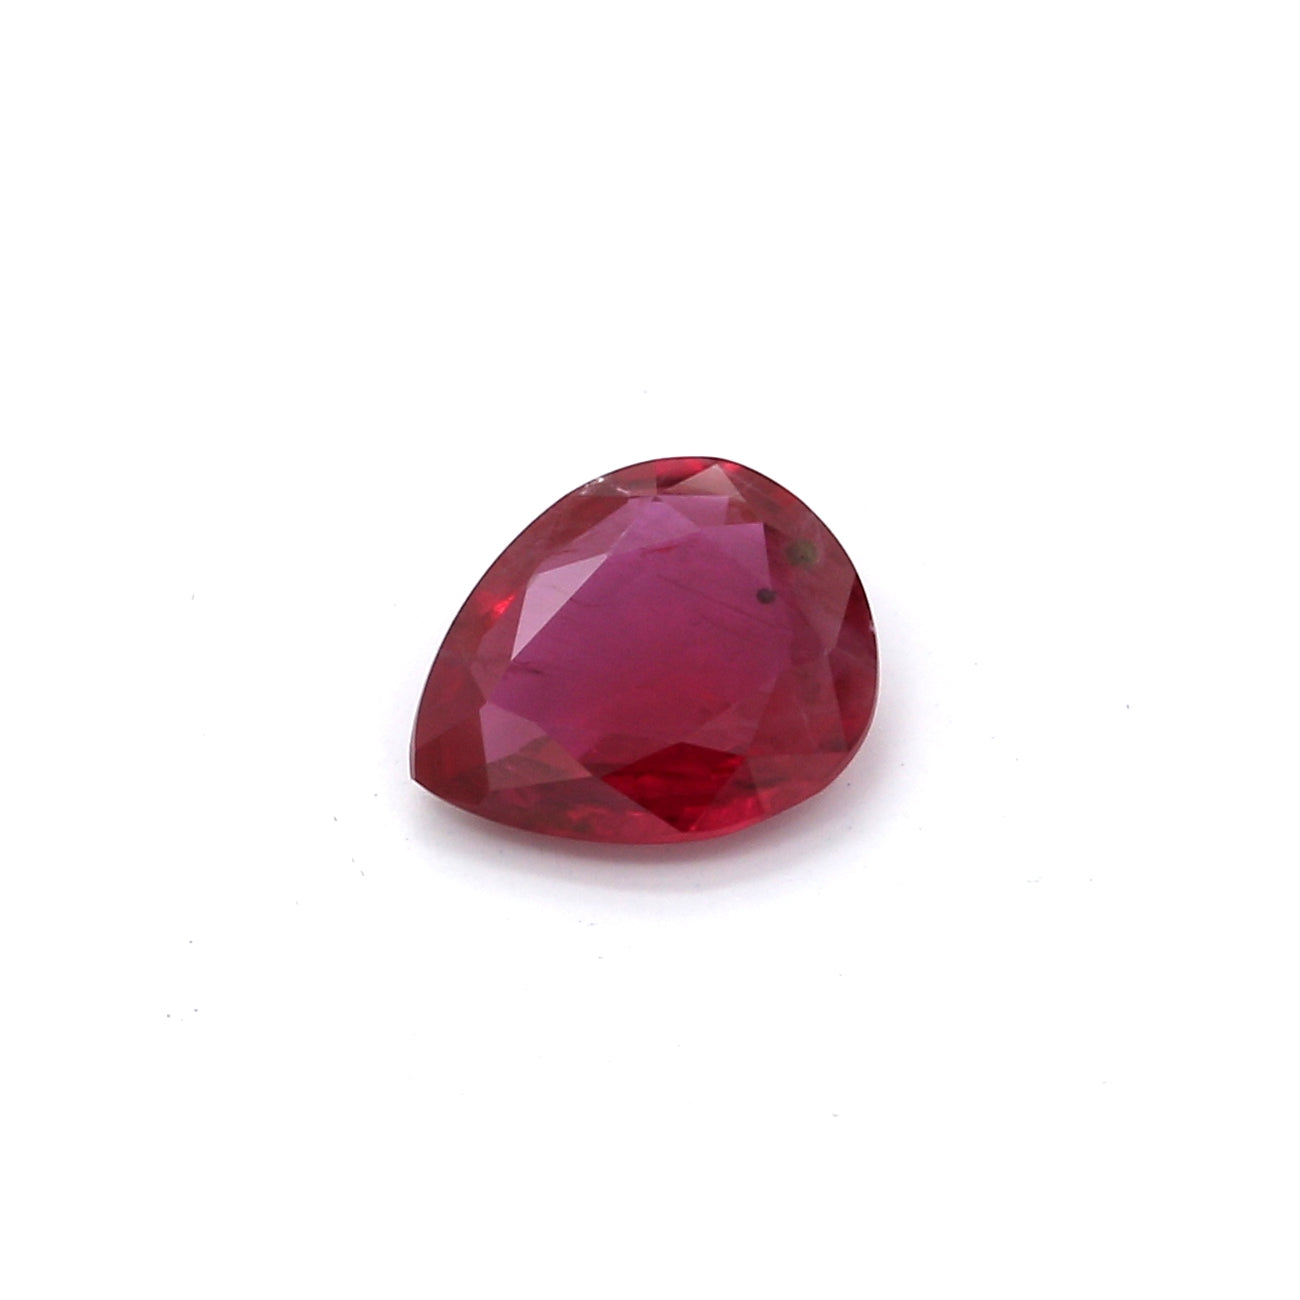 0.42ct Purplish Red, Pear Shape Ruby, H(b), Thailand - 5.74 x 4.65 x 1.81mm